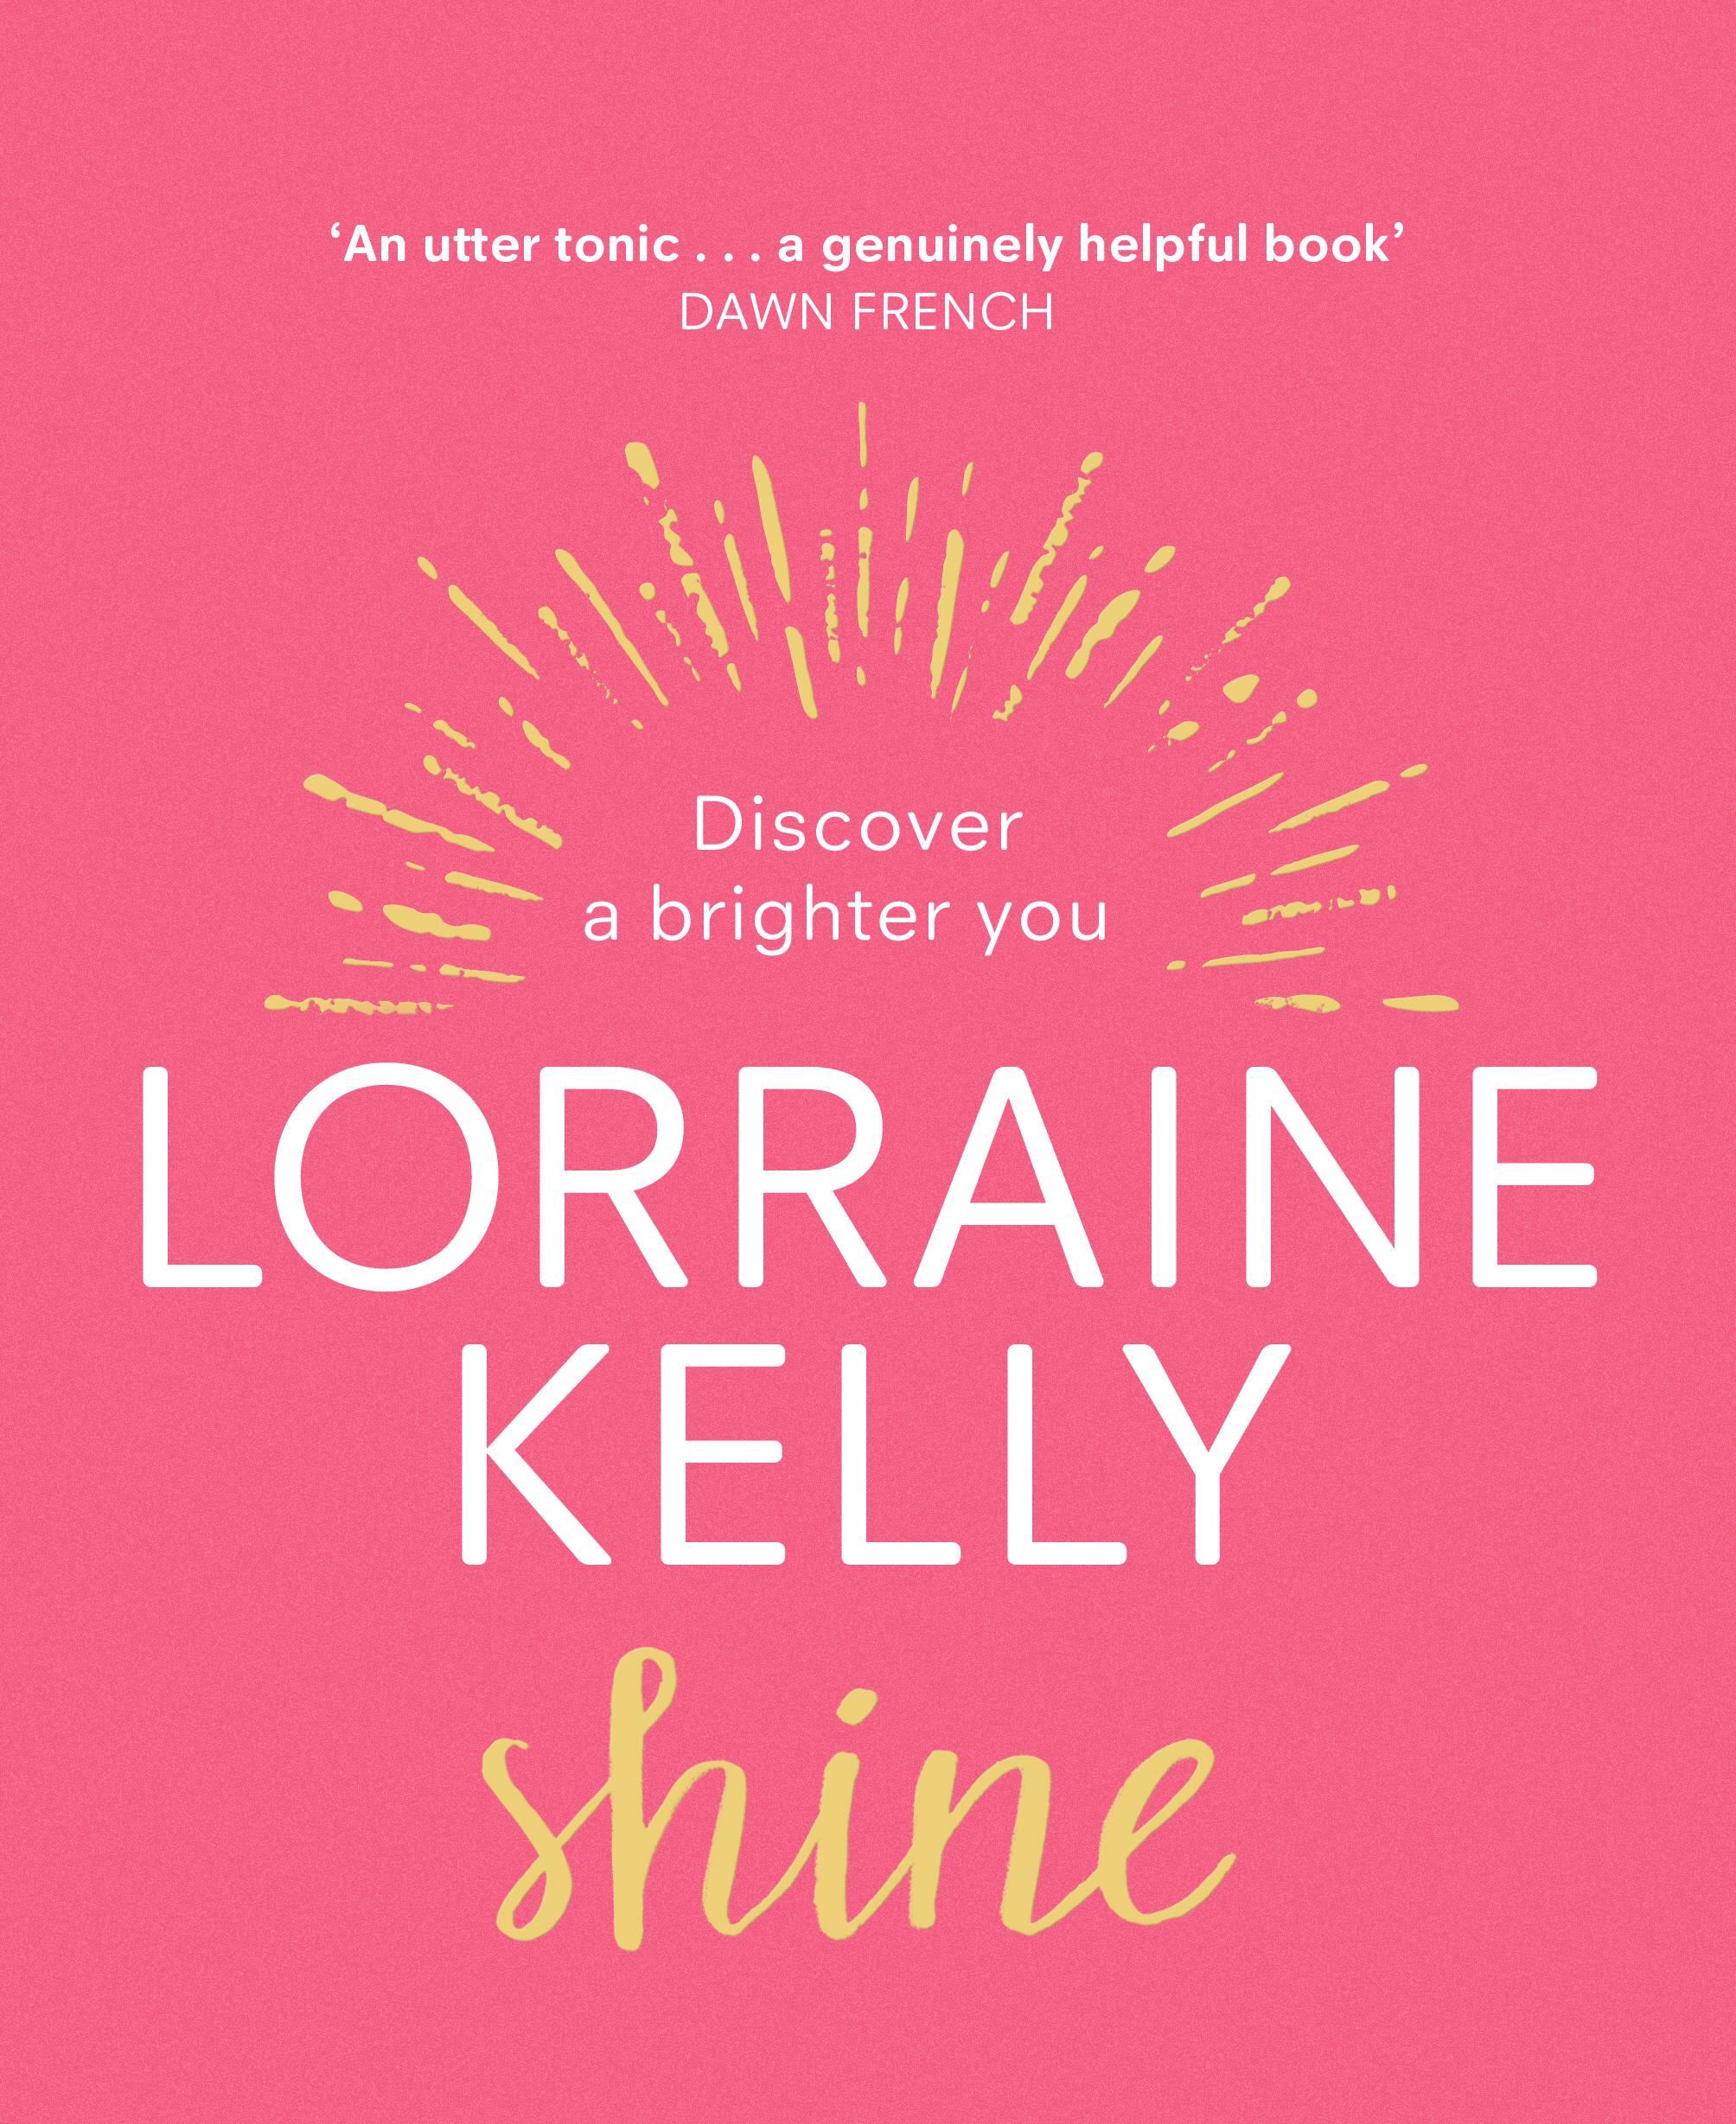 Shine - Lorraine Kelly